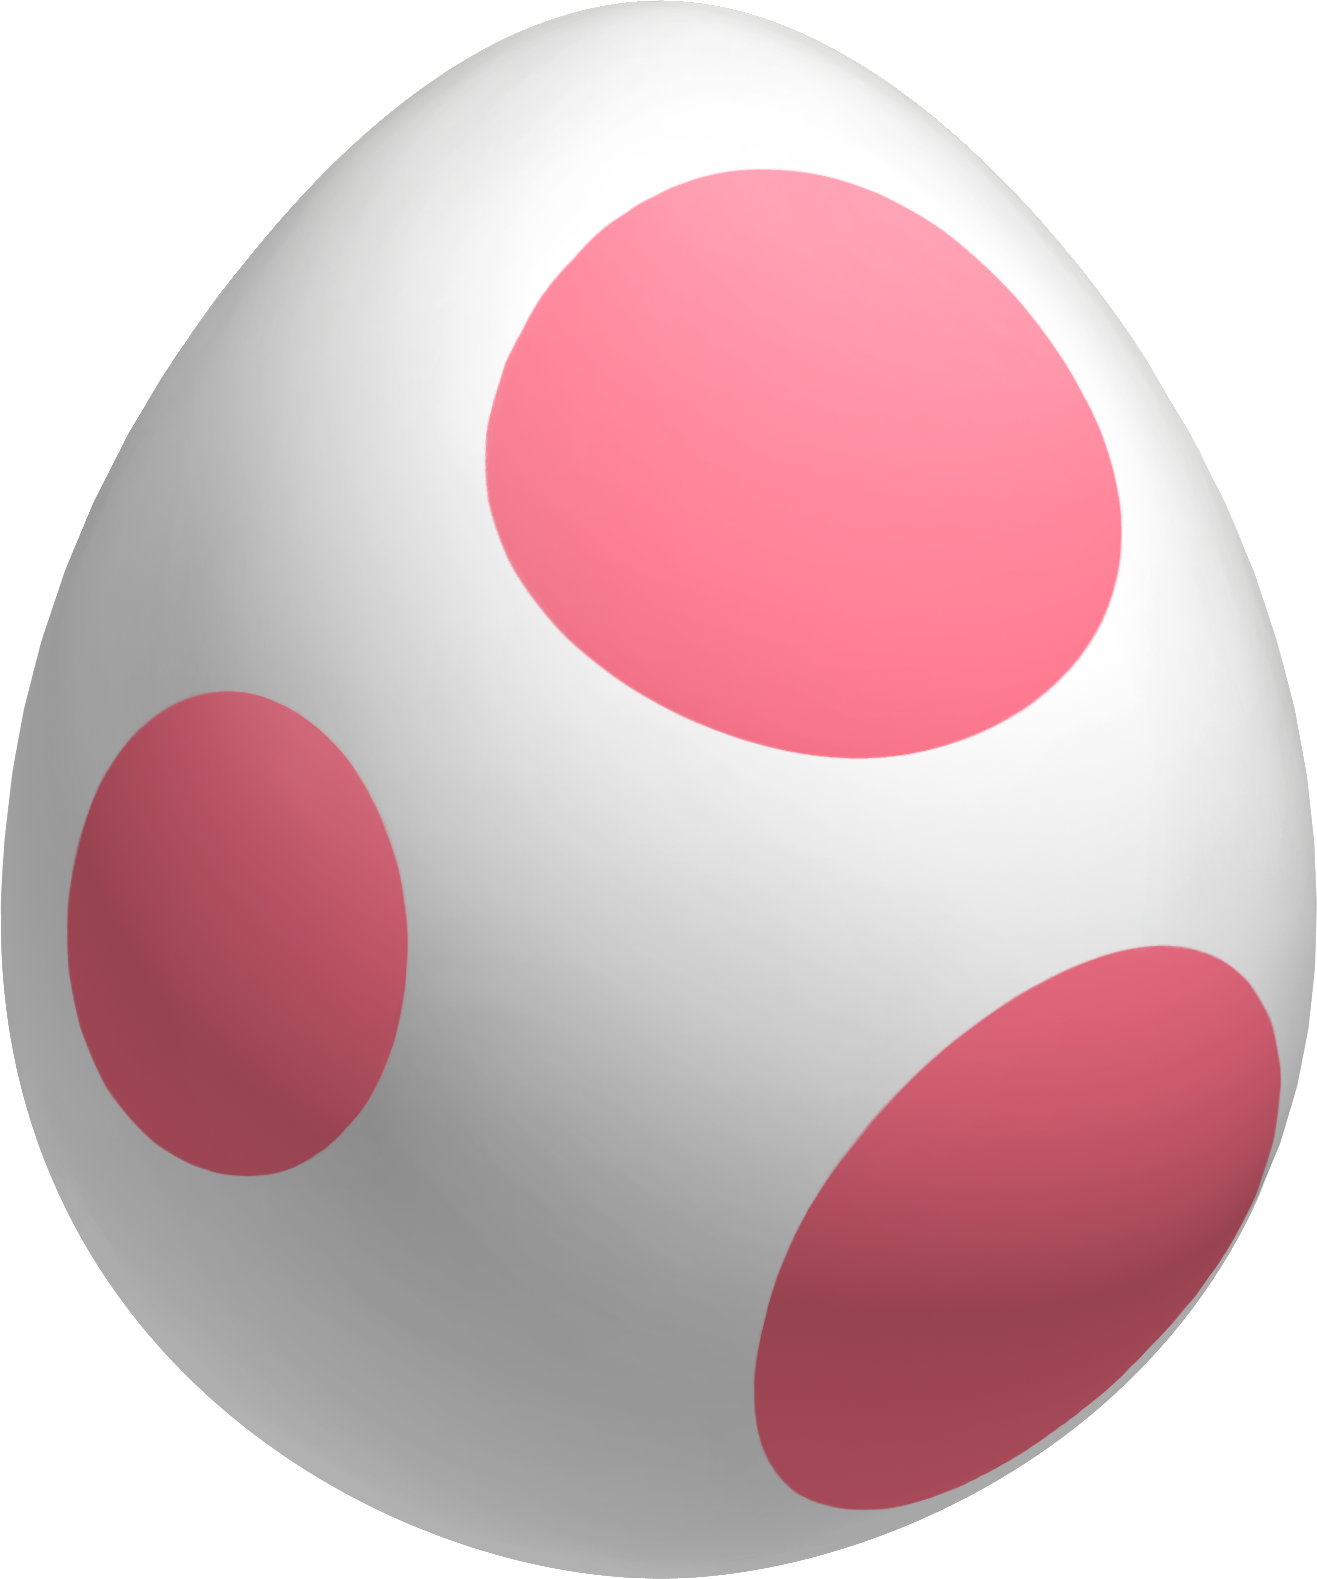 Pink Yoshi Egg, The SMG4/GLITCH Wiki